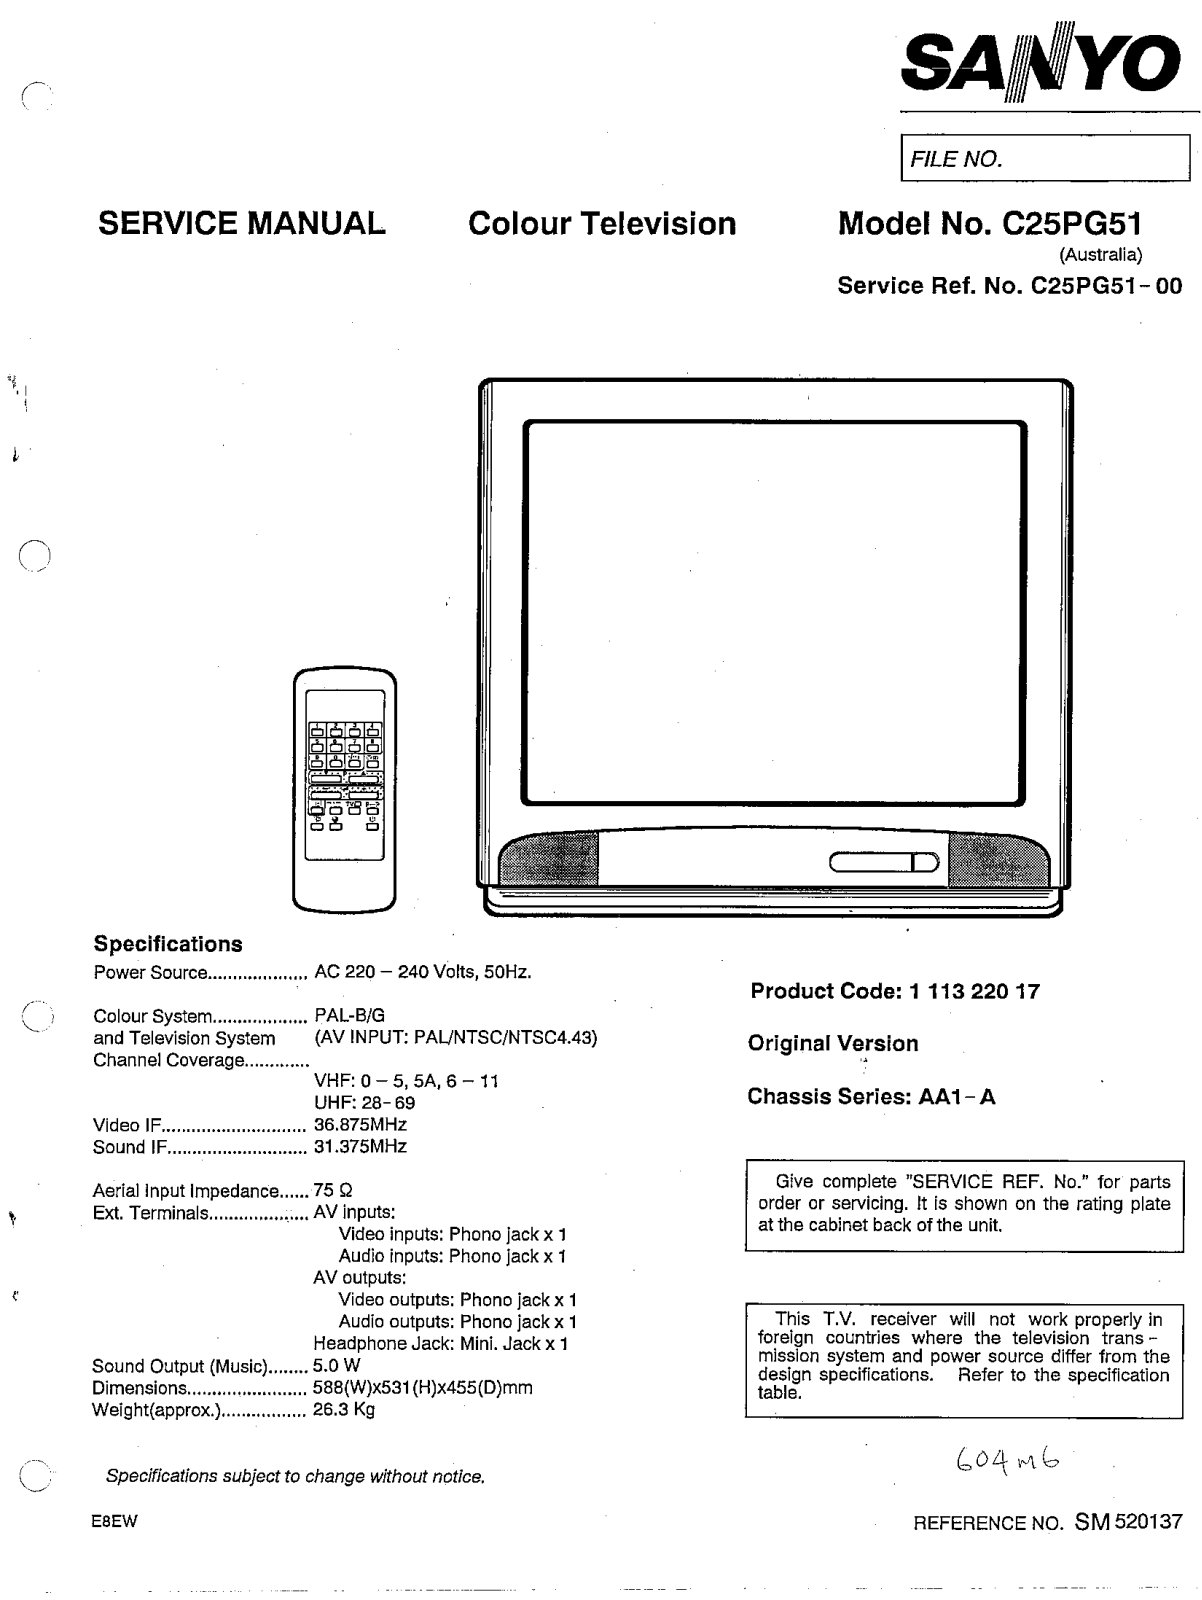 SANYO C25PG51 Service Manual